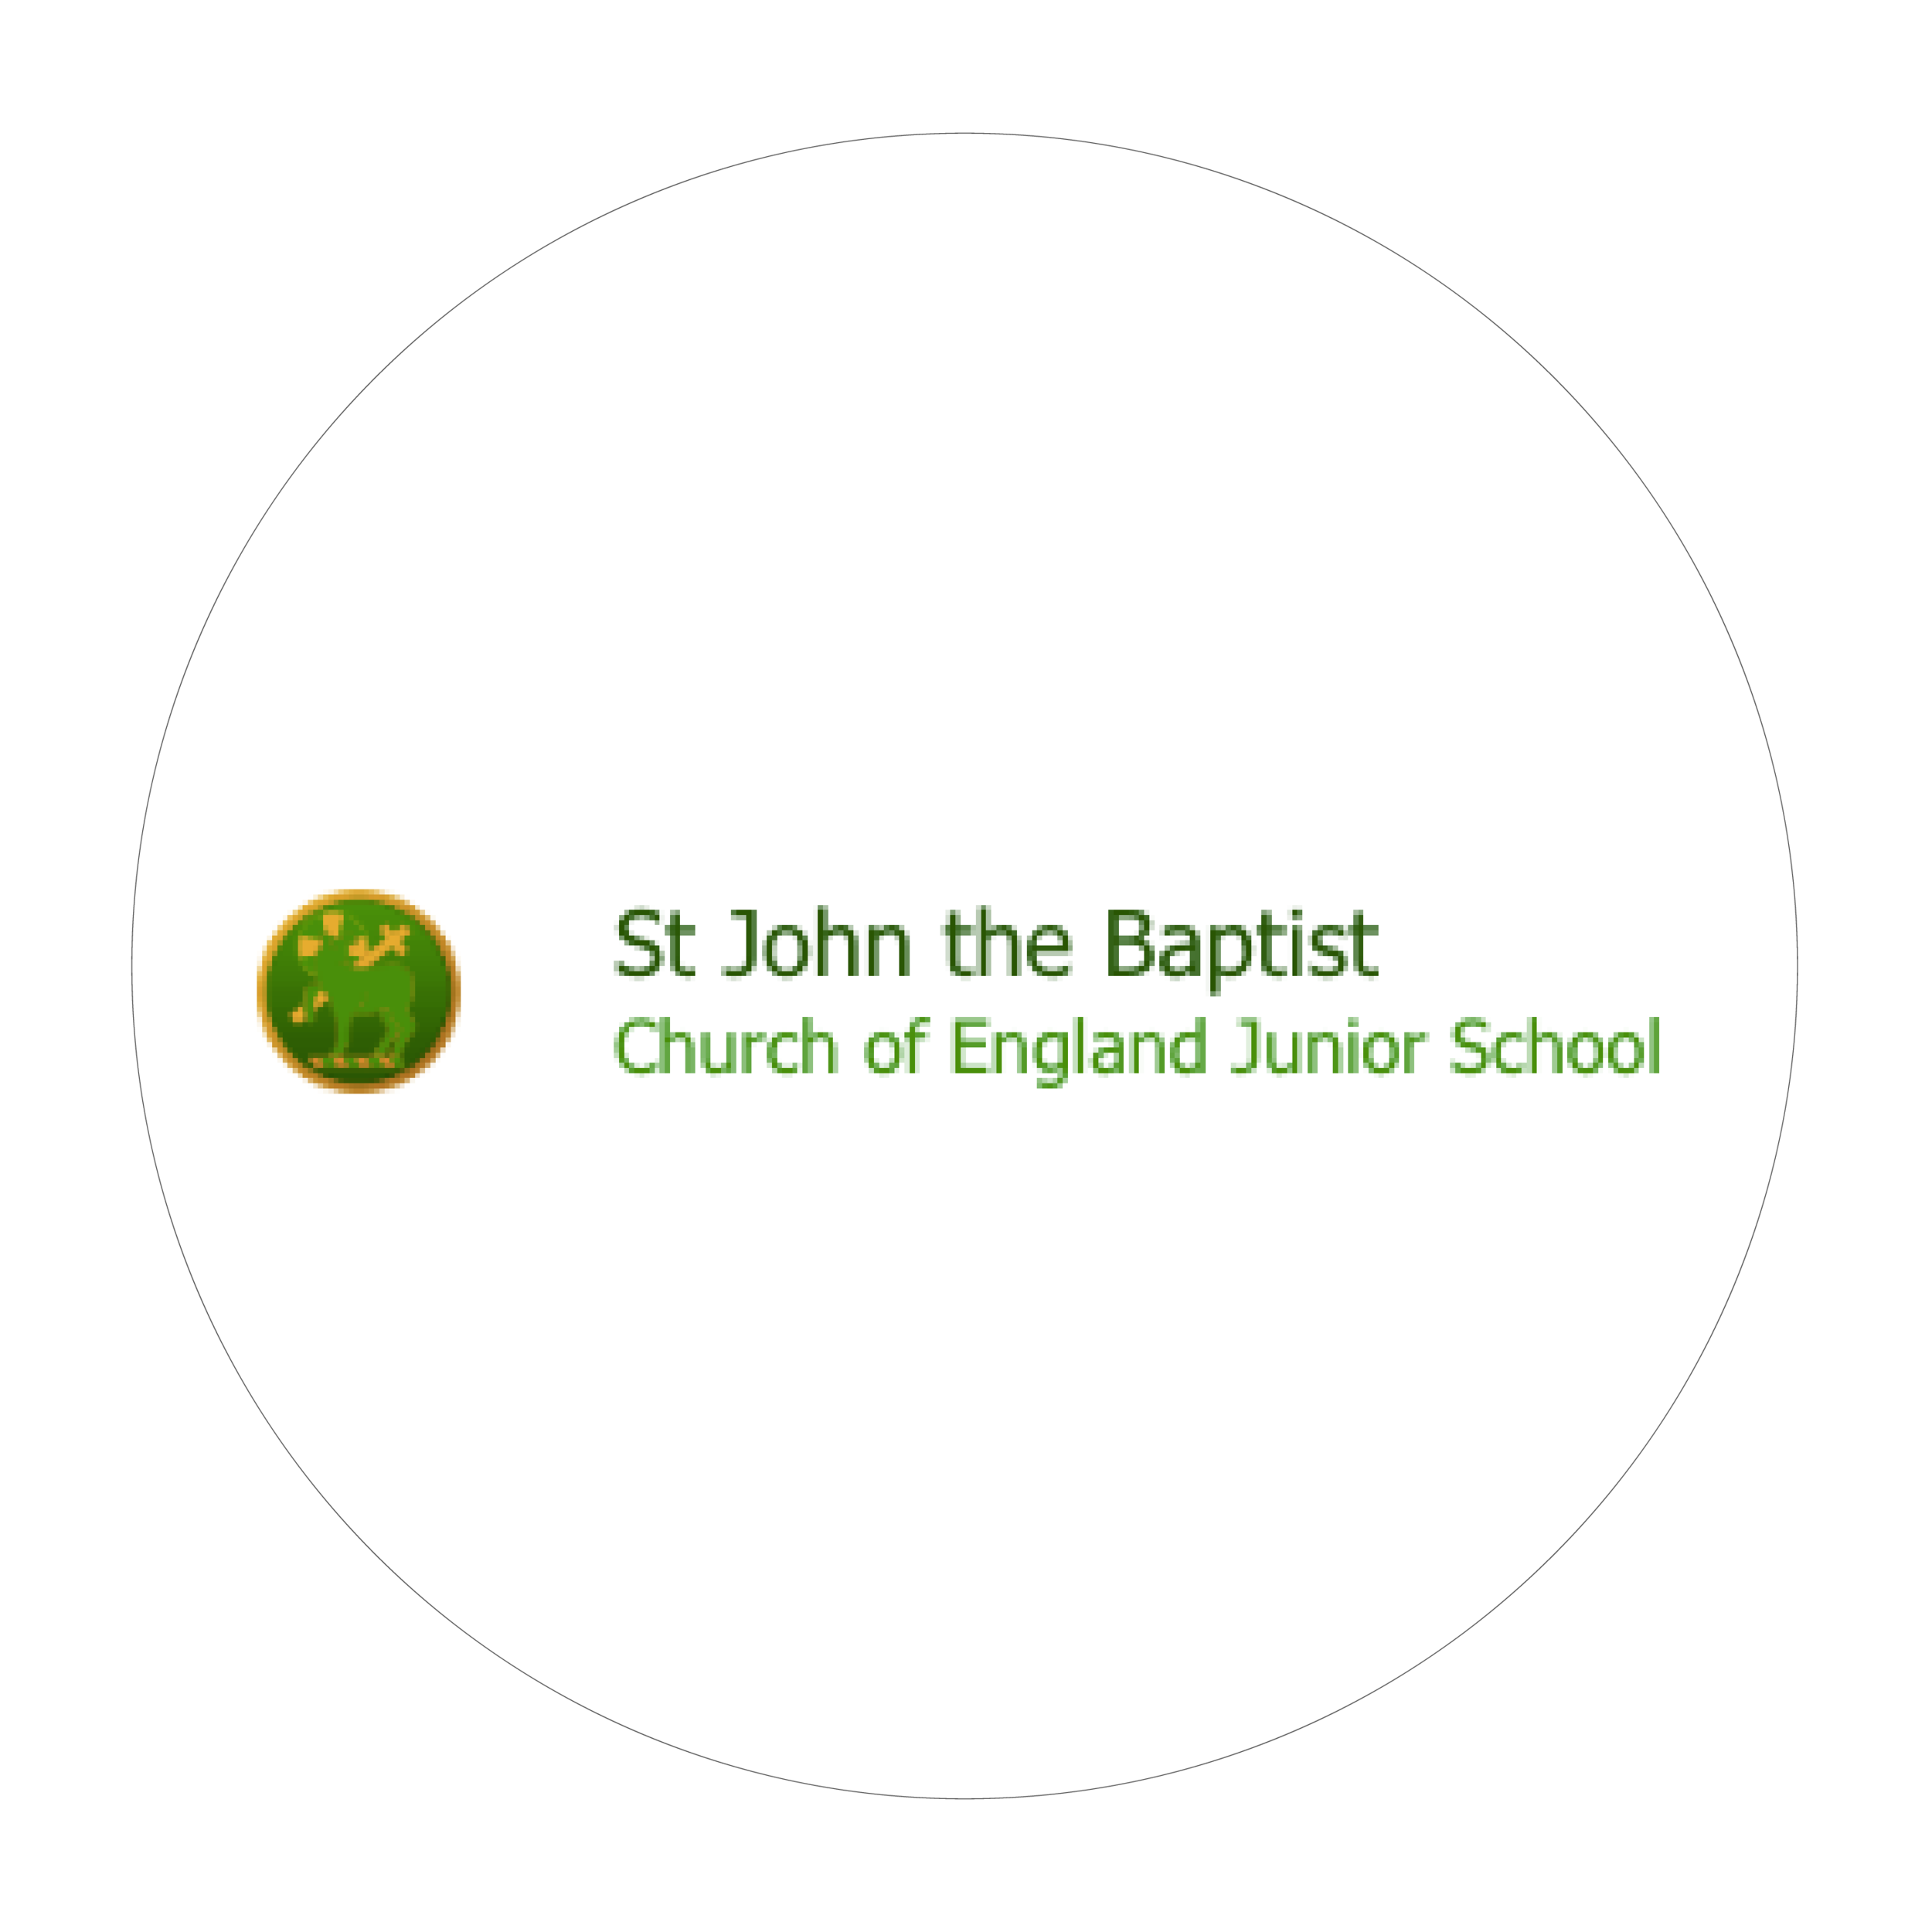 St John the Baptist Church of England Junior School